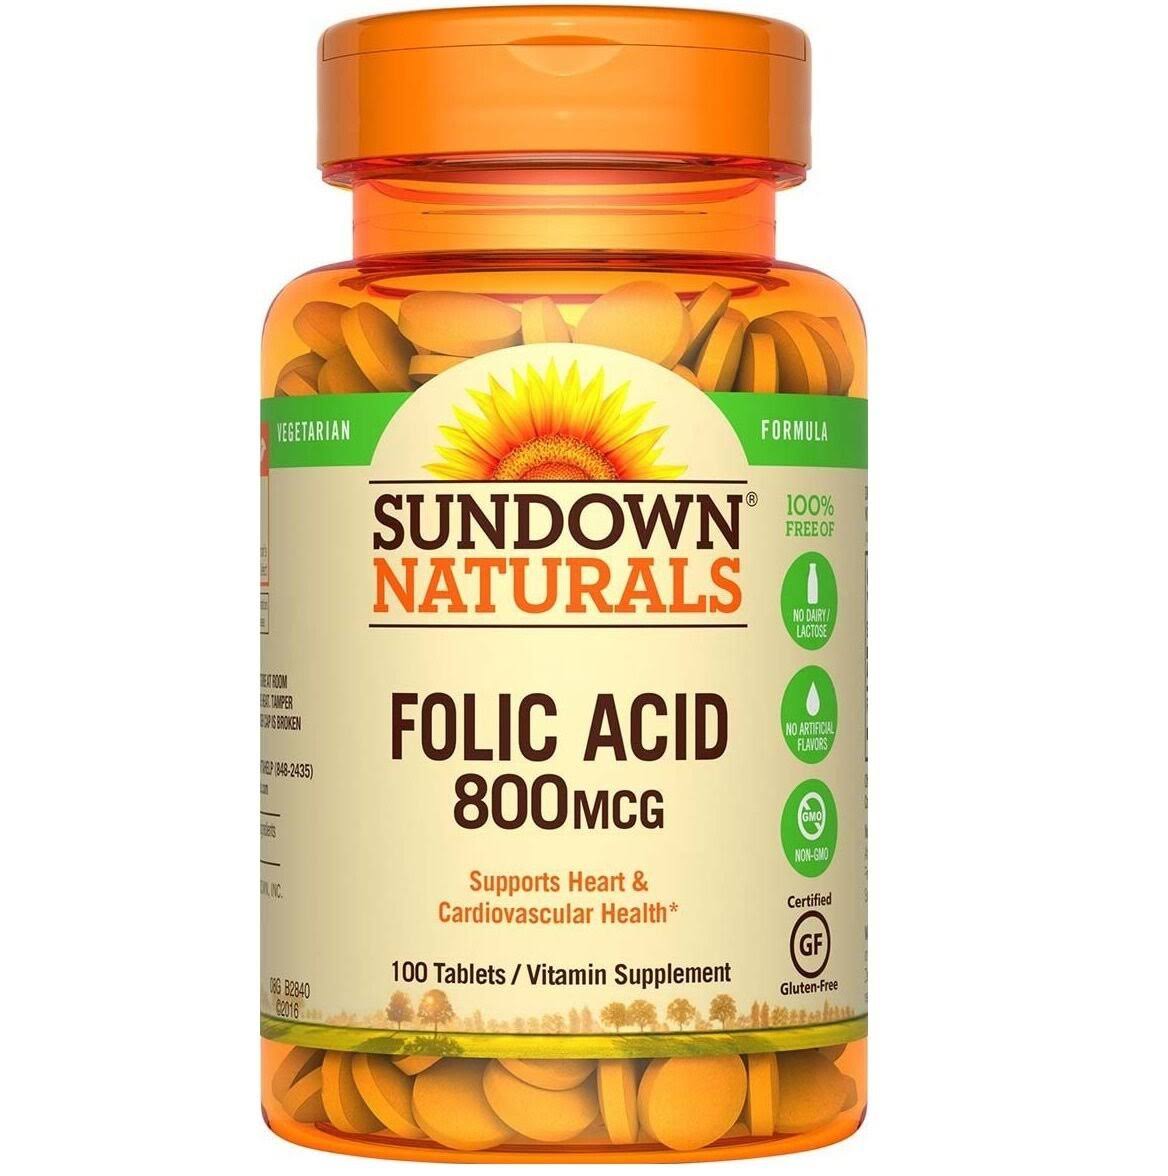 Sundown Naturals Folic Acid - 800 mcg, 100 ct